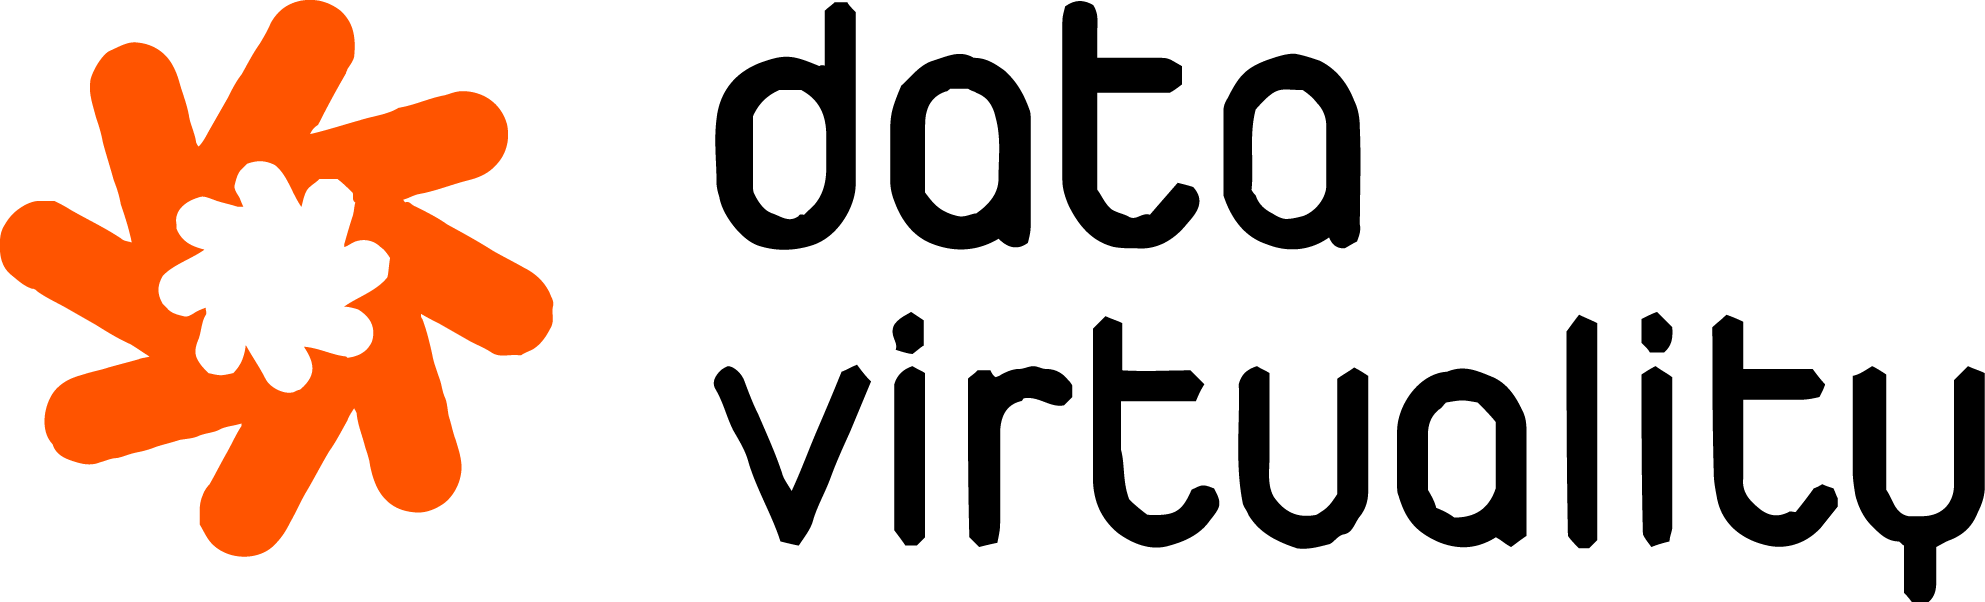 Virtuality Logo - Data Virtuality